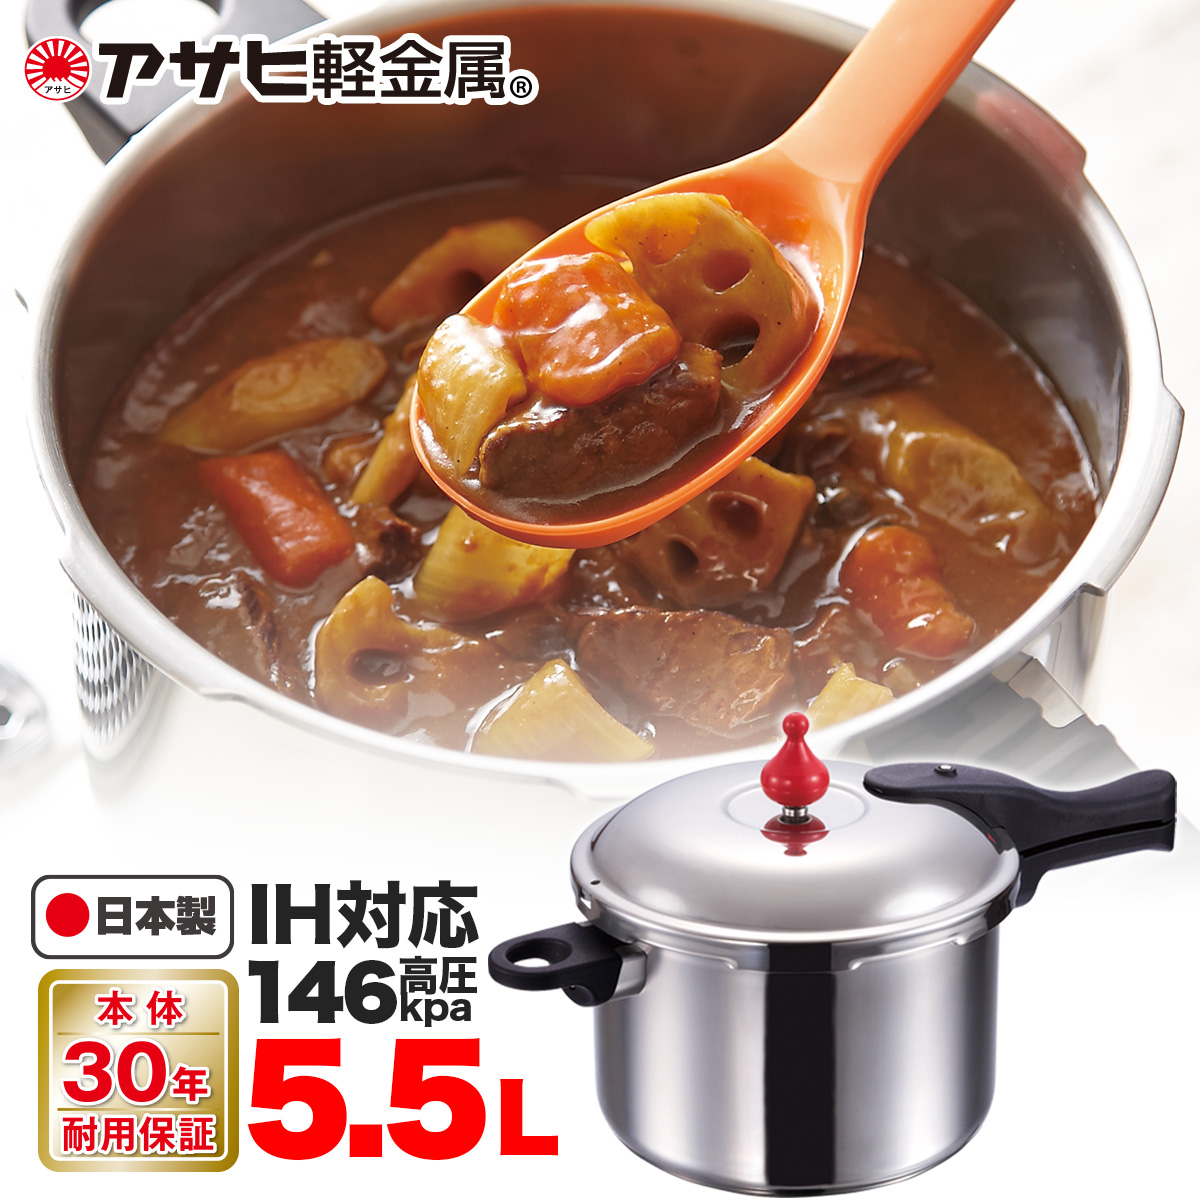 【楽天市場】＼ 送料無料 ／146kPaの高調理圧 日本製「ゼロ活力 